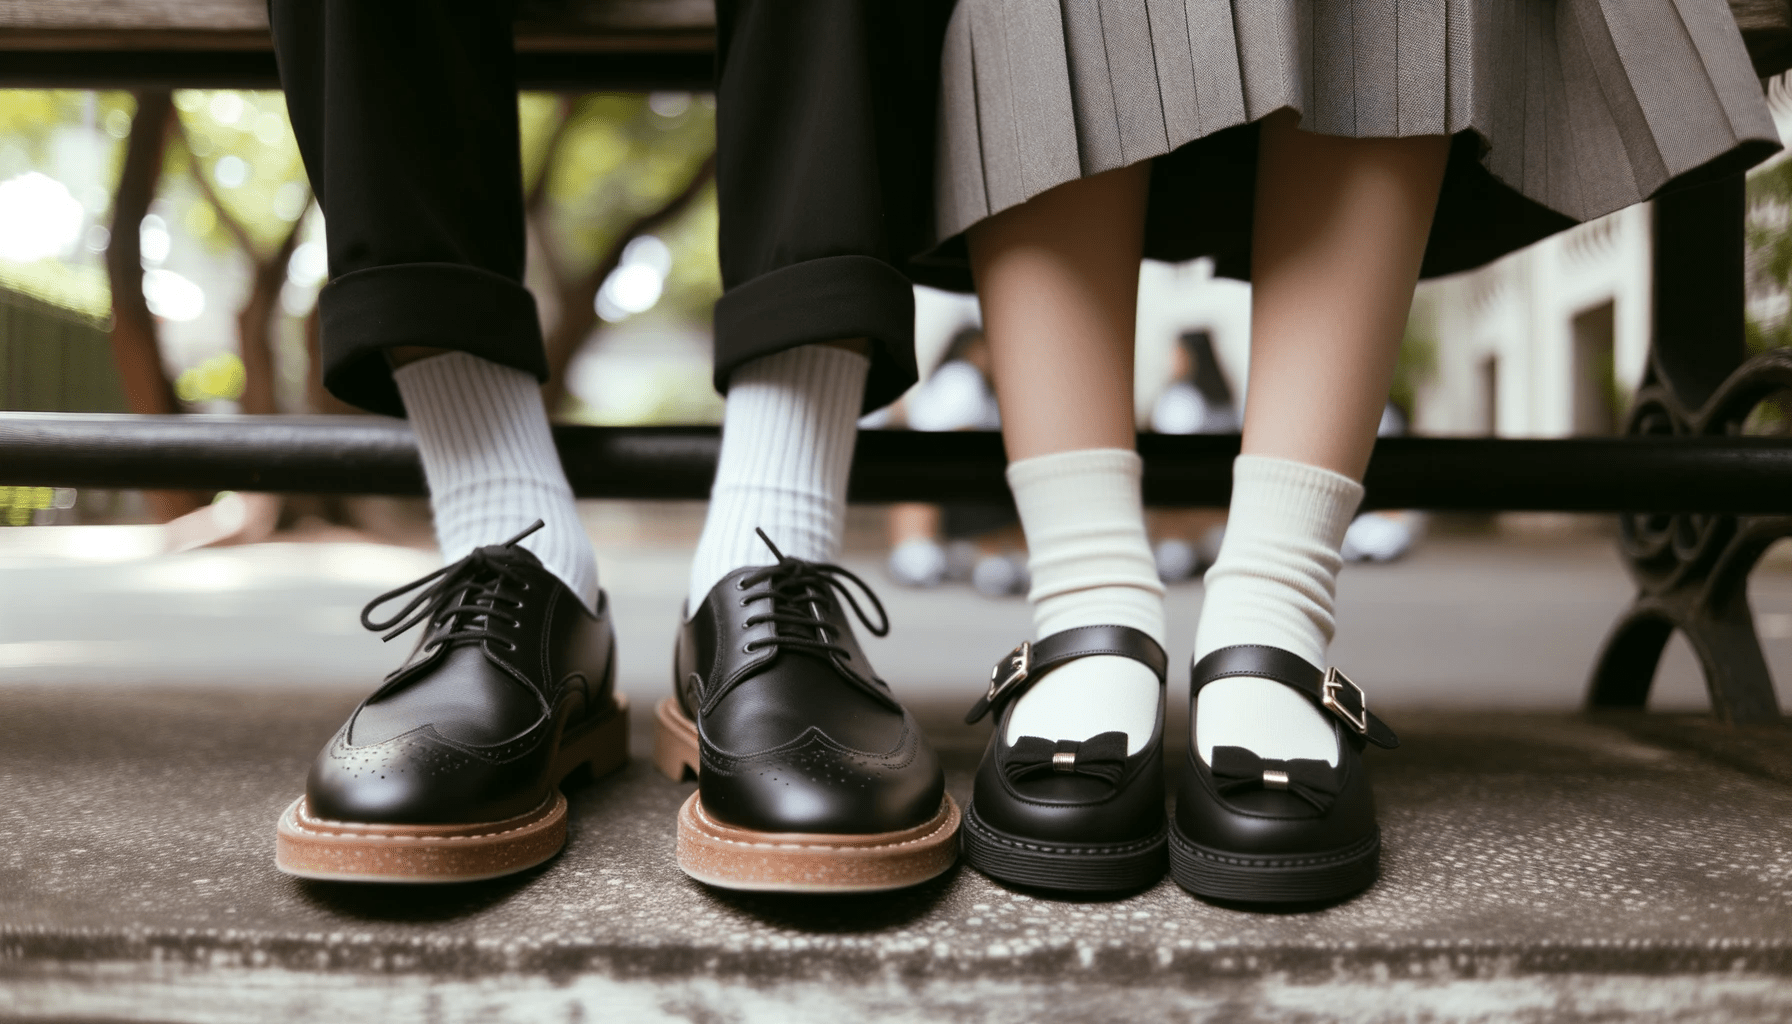 niños sentados con zapato escolar con suela de goma